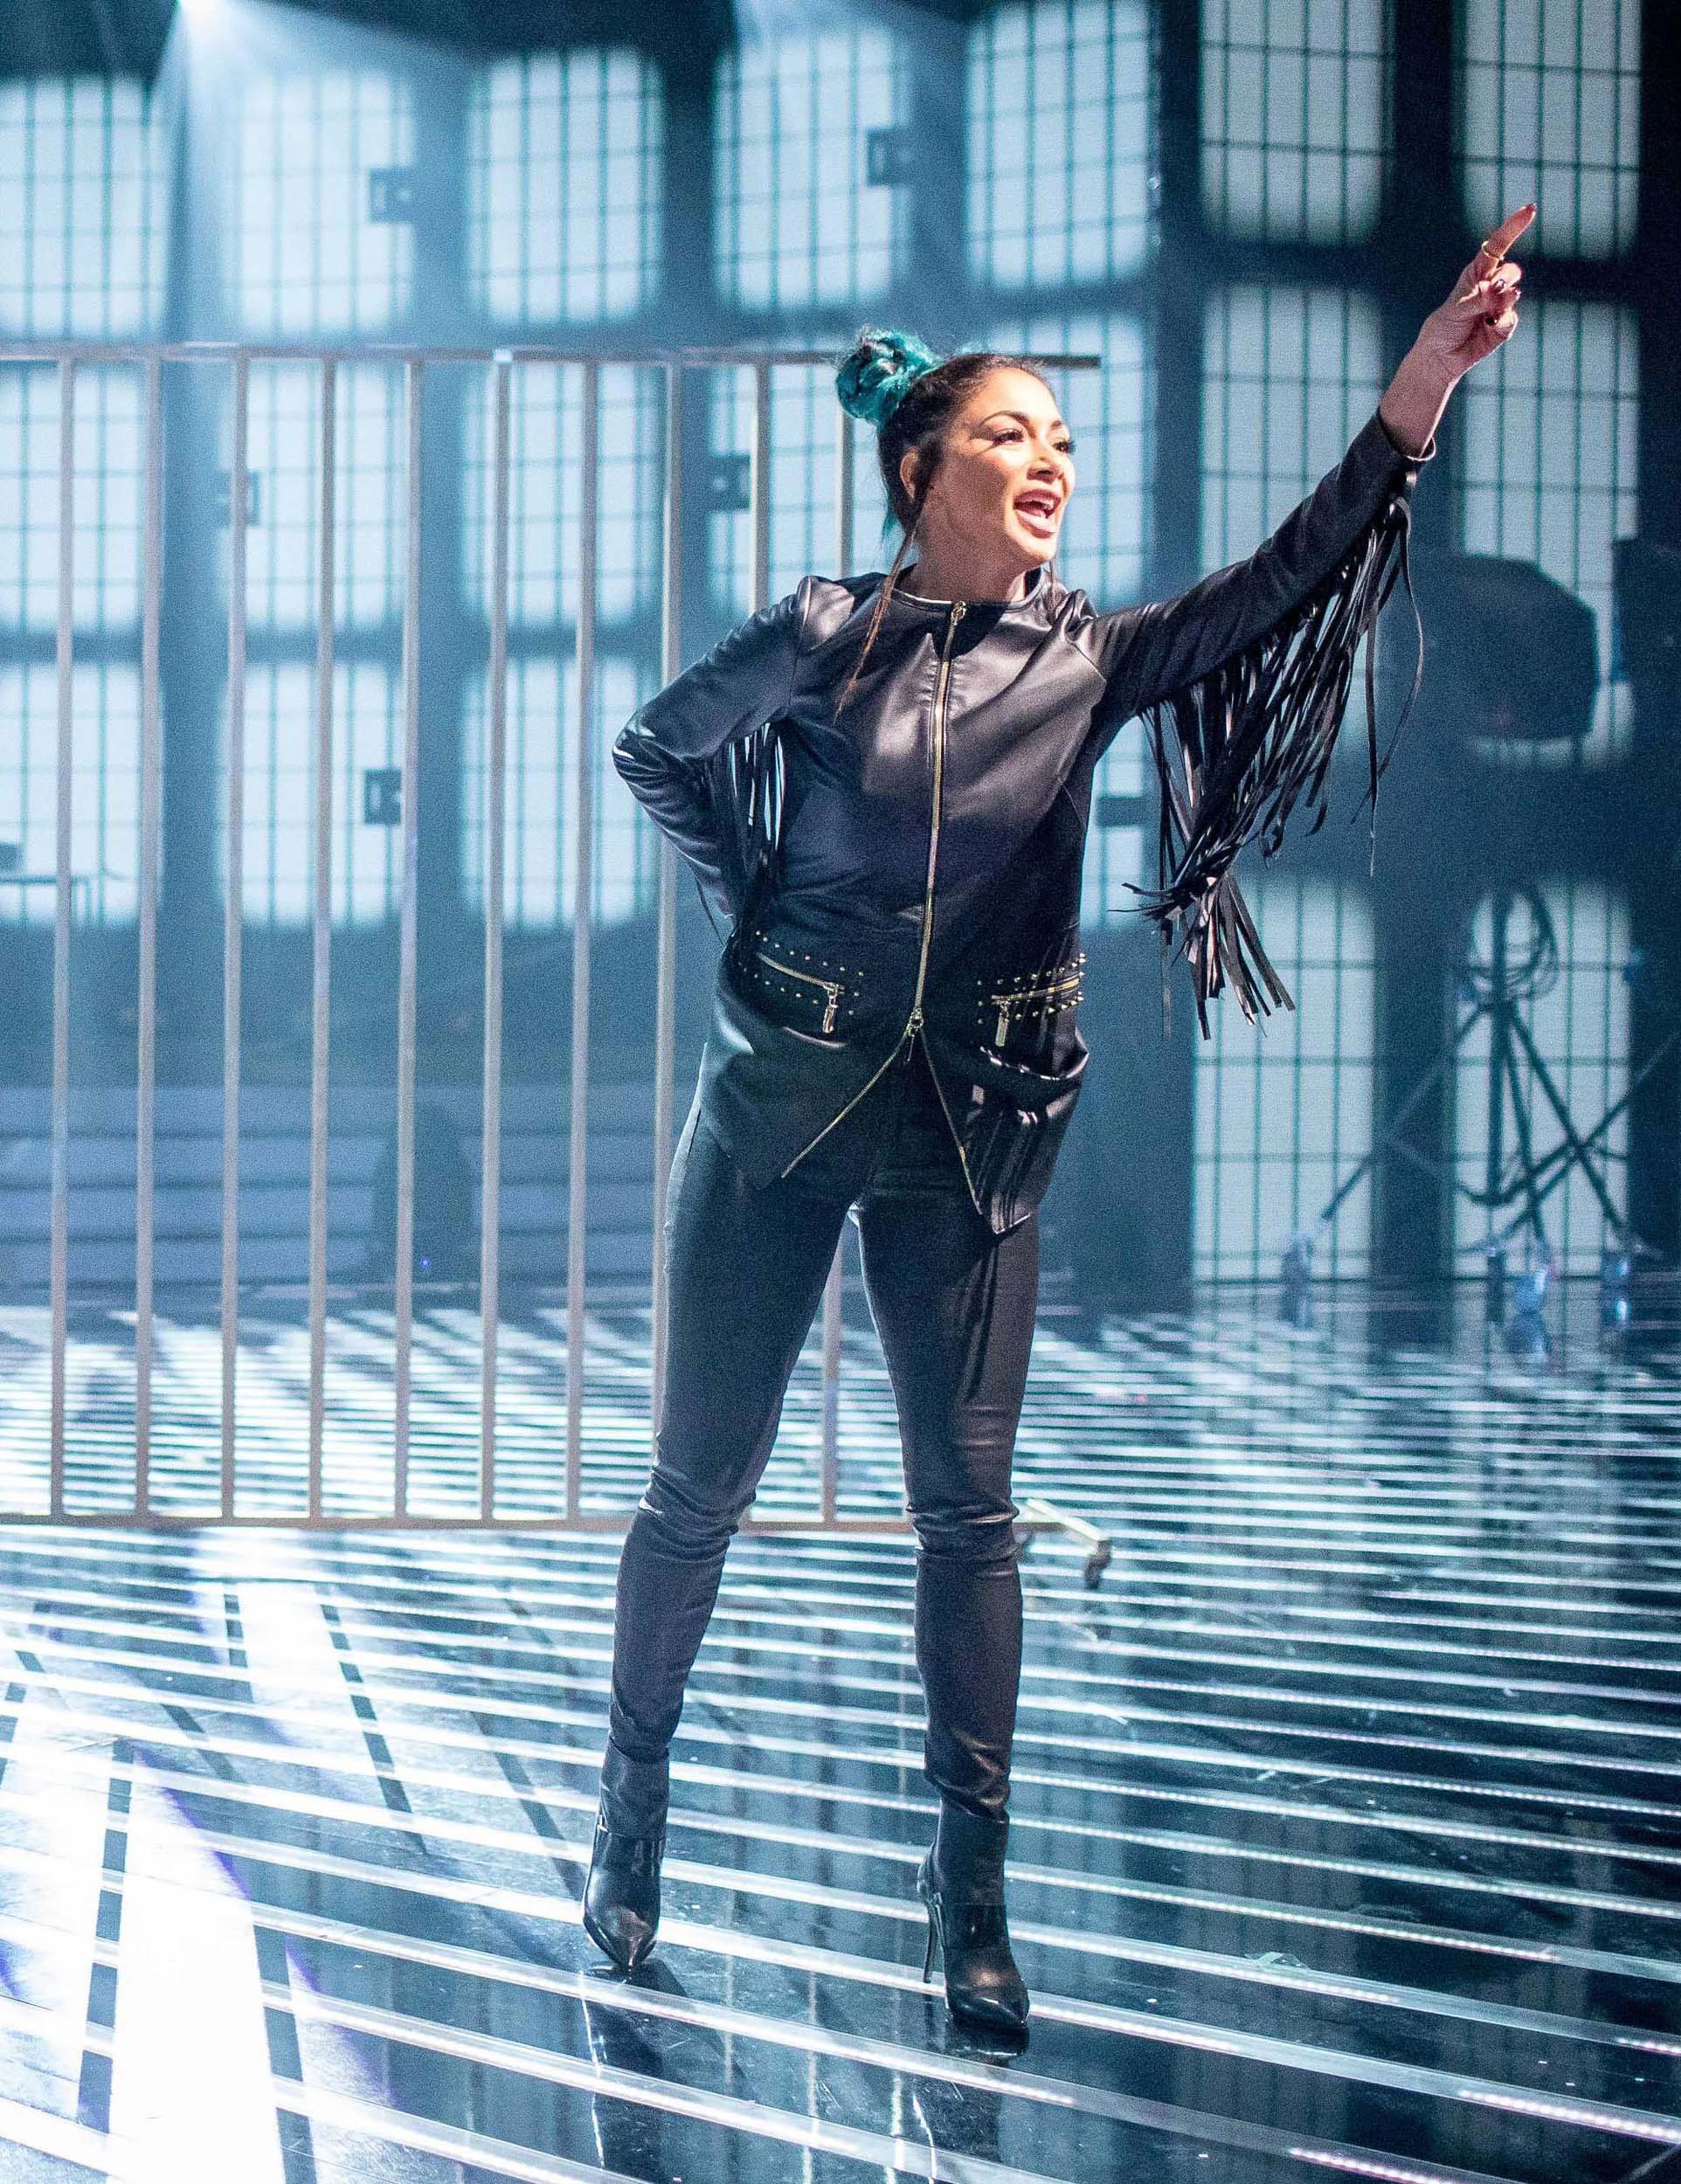 Nicole Scherzinger at X Factor UK